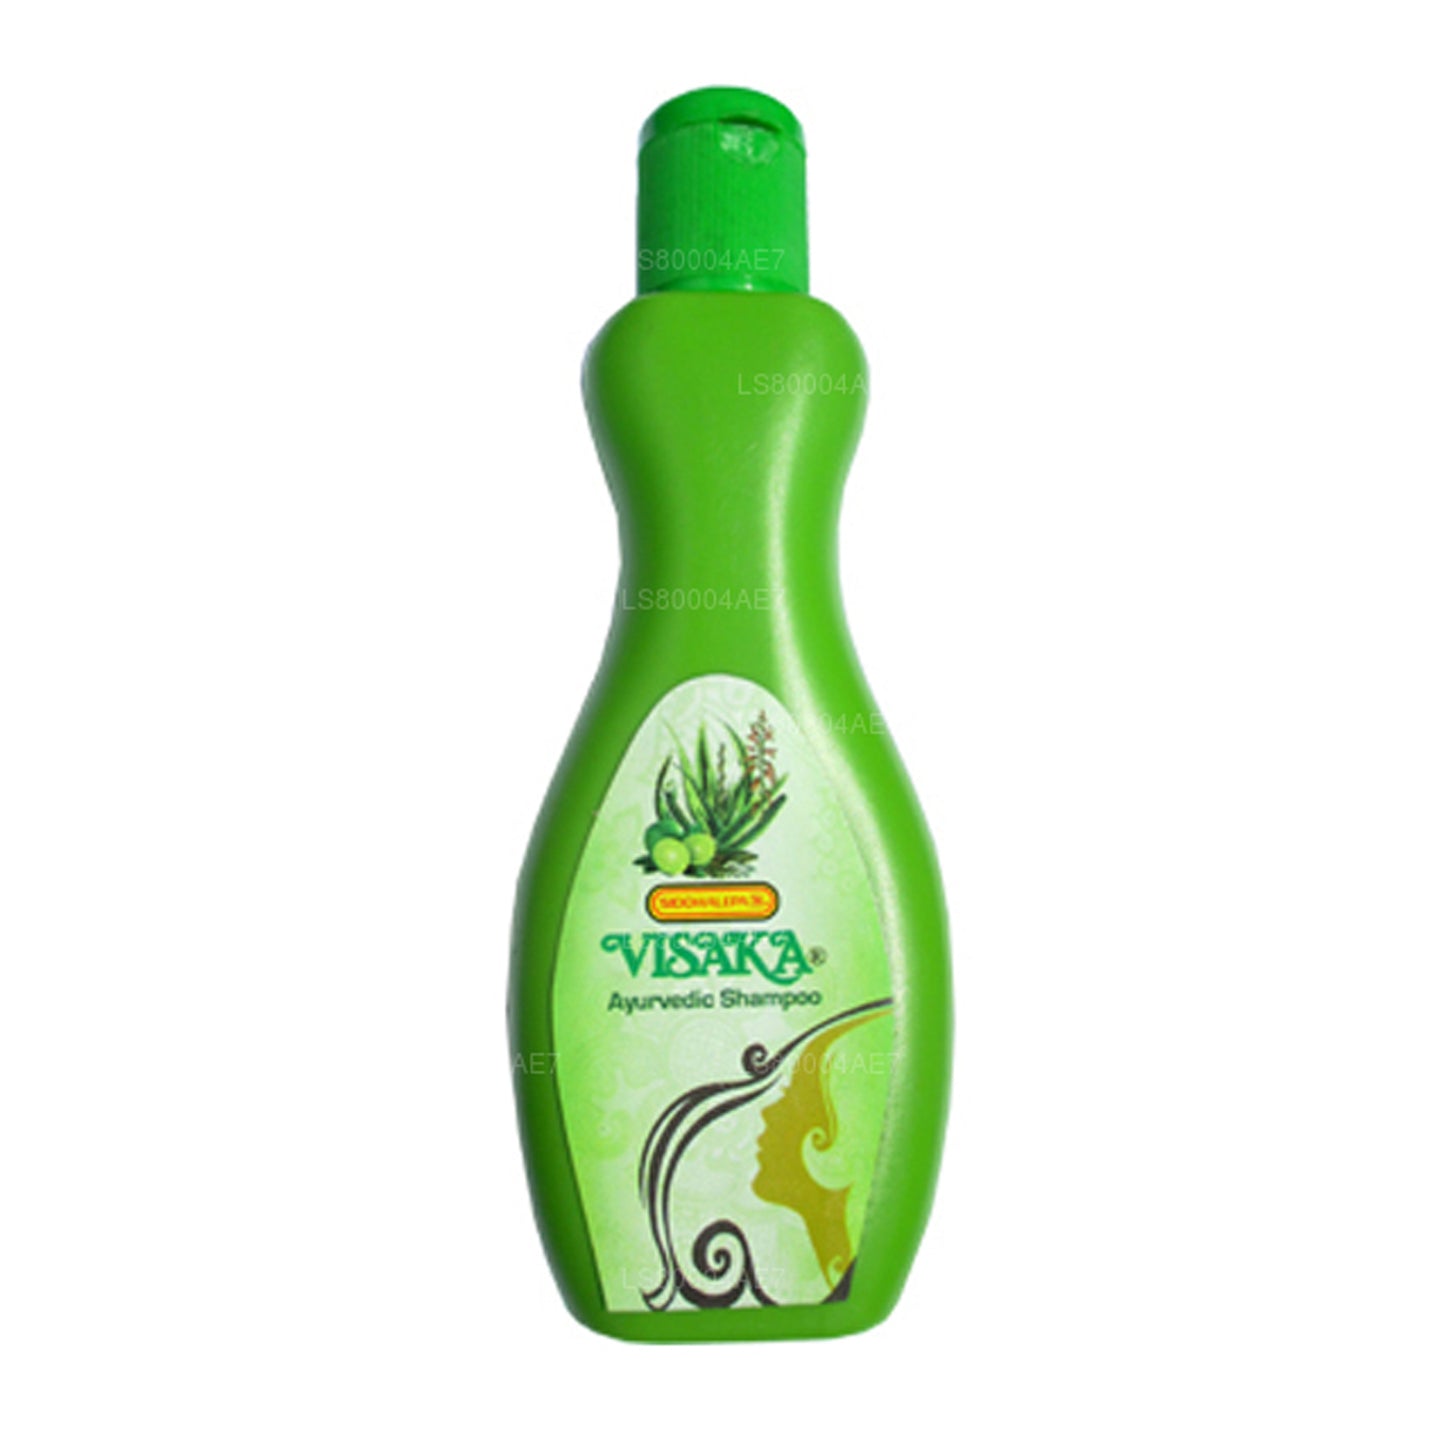 Siddhalepa Visaka Ayurveda šampoon (100ml)